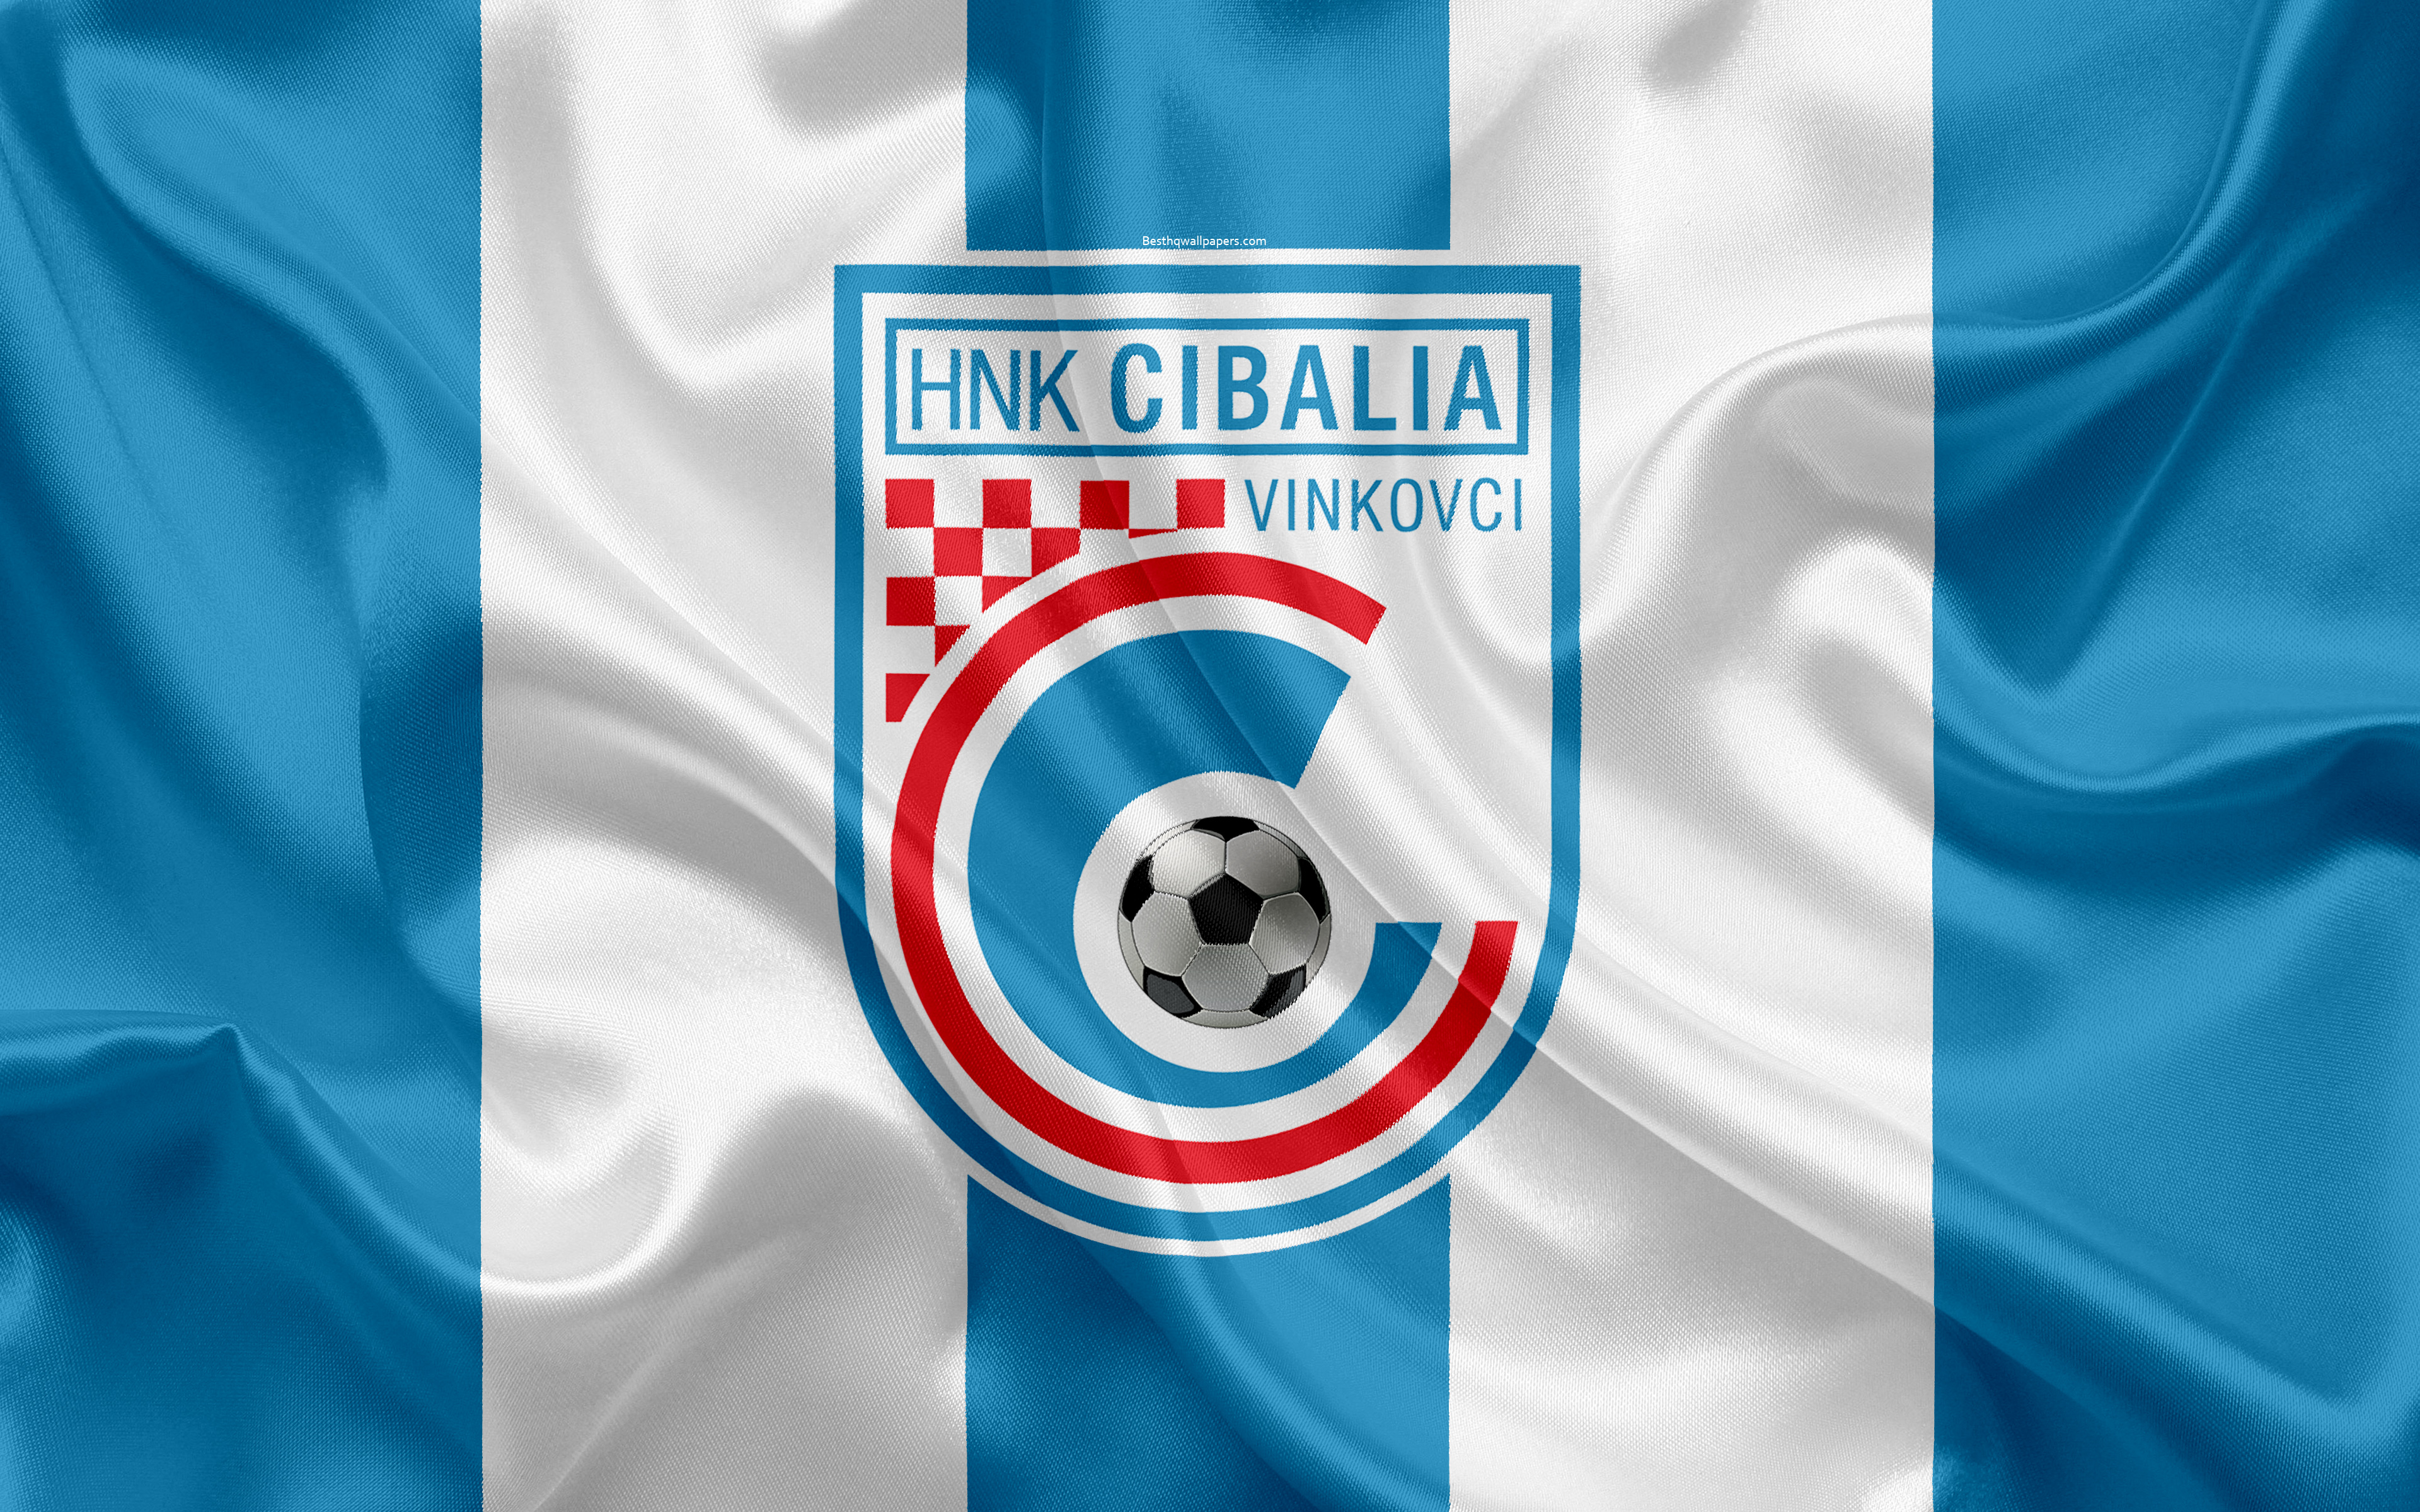 hnk-cibalia-4k-croatian-football-club-emblem-logo.jpg